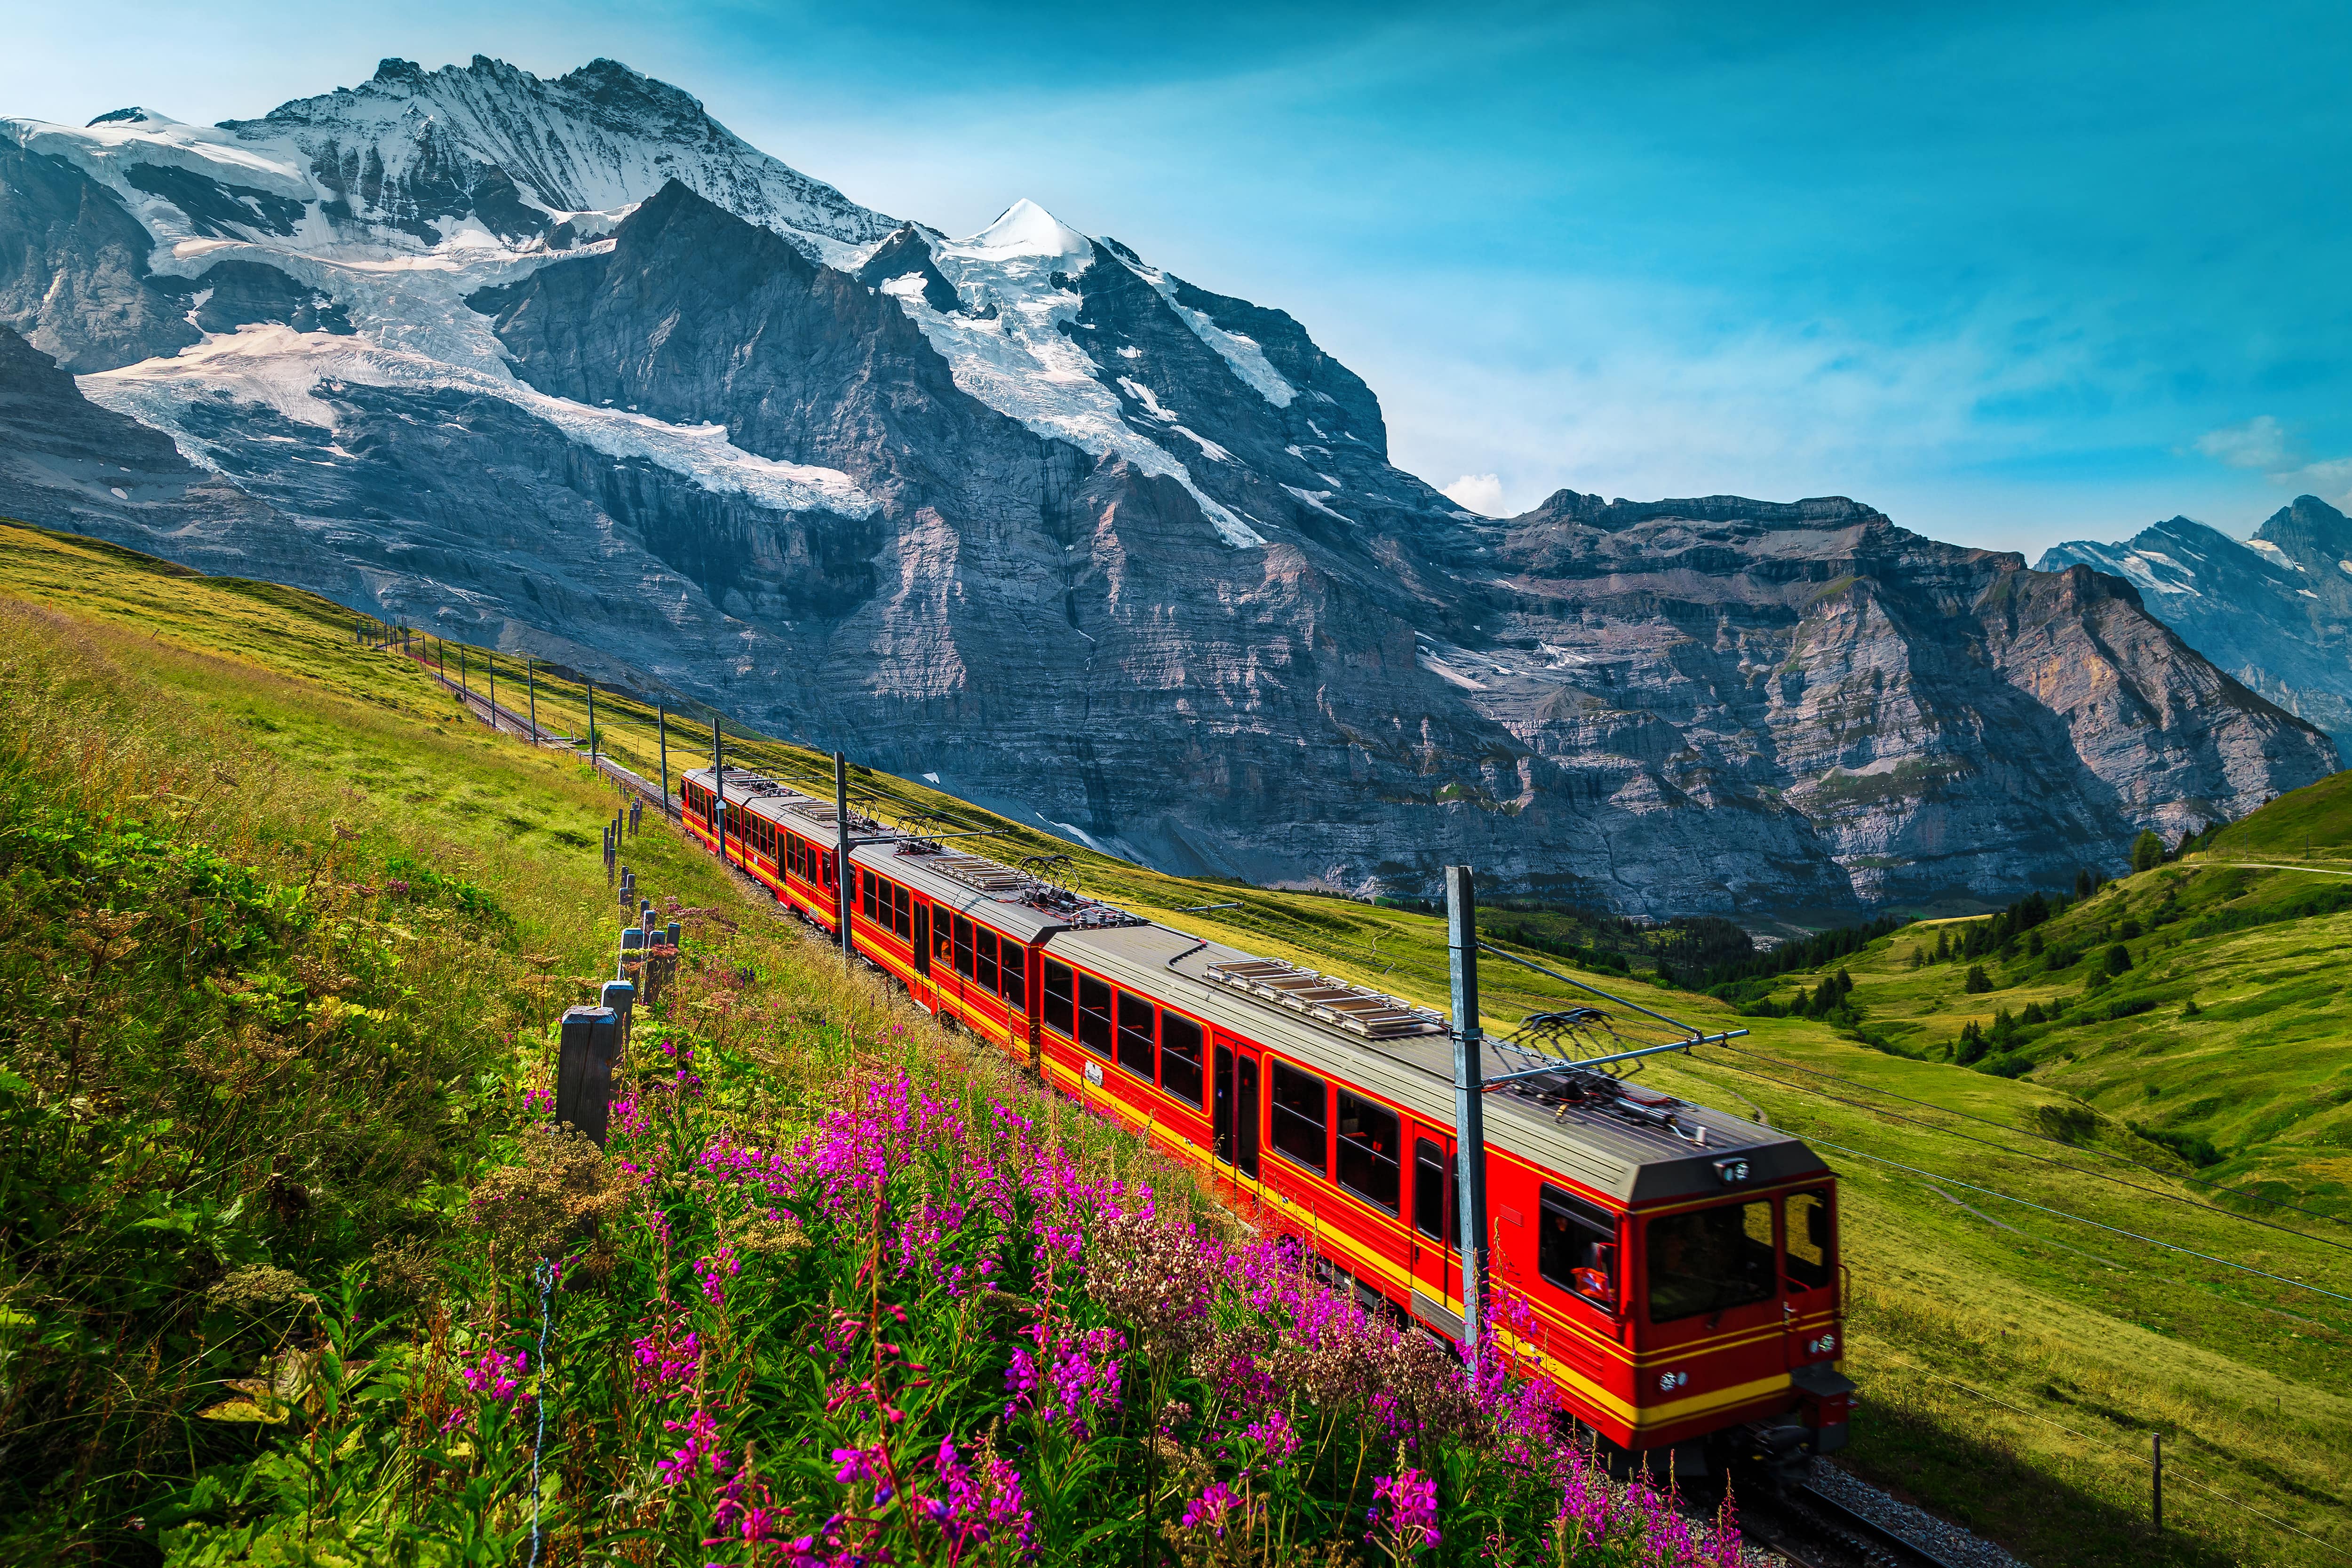 The red swiss train traversing through the lush green mountains of switzerland